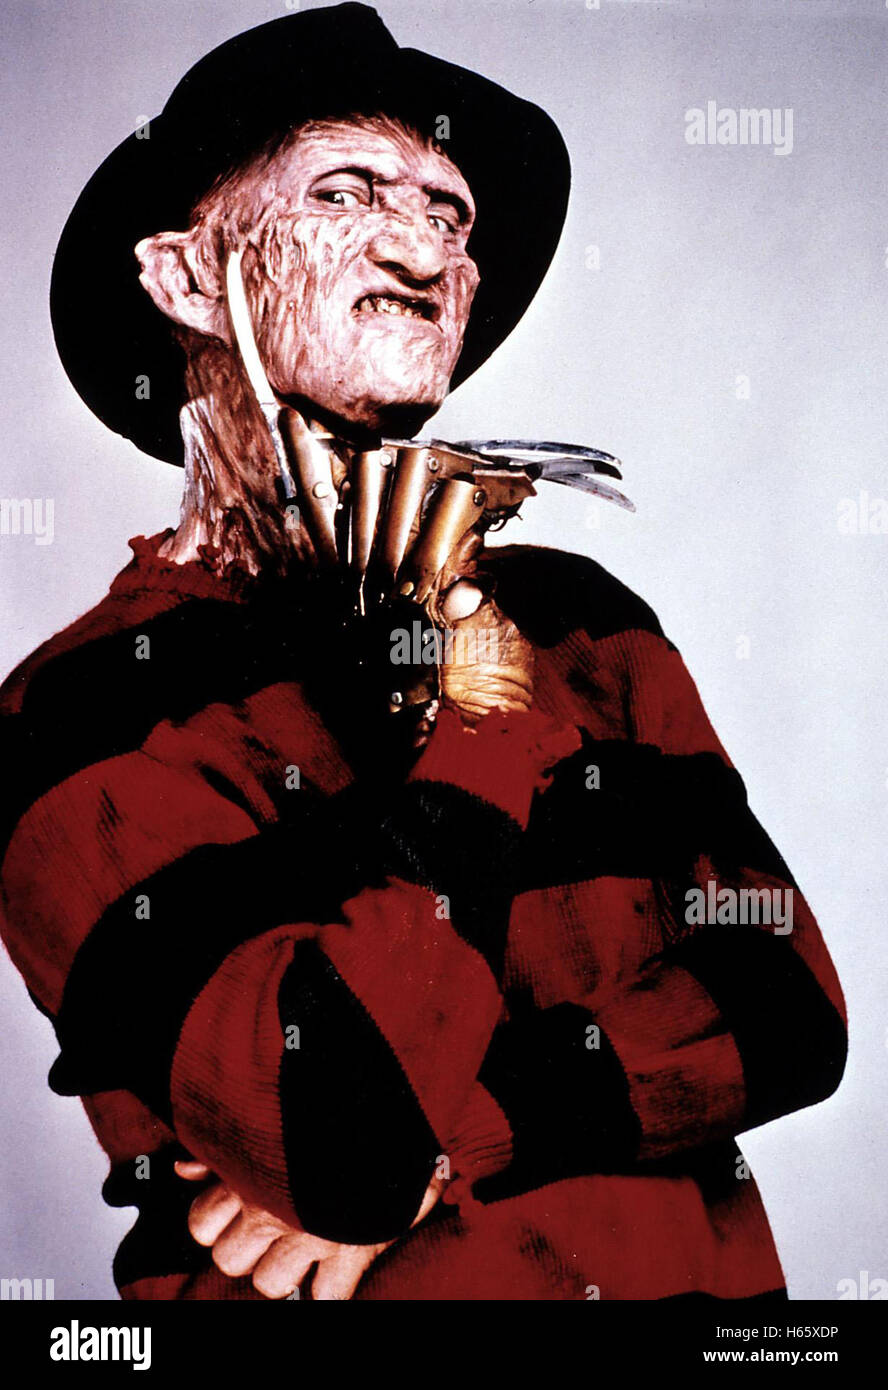 Nightmare - Mörderische Träume,USA 1984 aka. A Nightmare on Elm Street, Director: Wes Craven, Actors/Stars: Heather Langenkamp, Johnny Depp, Robert Englund Stock Photo